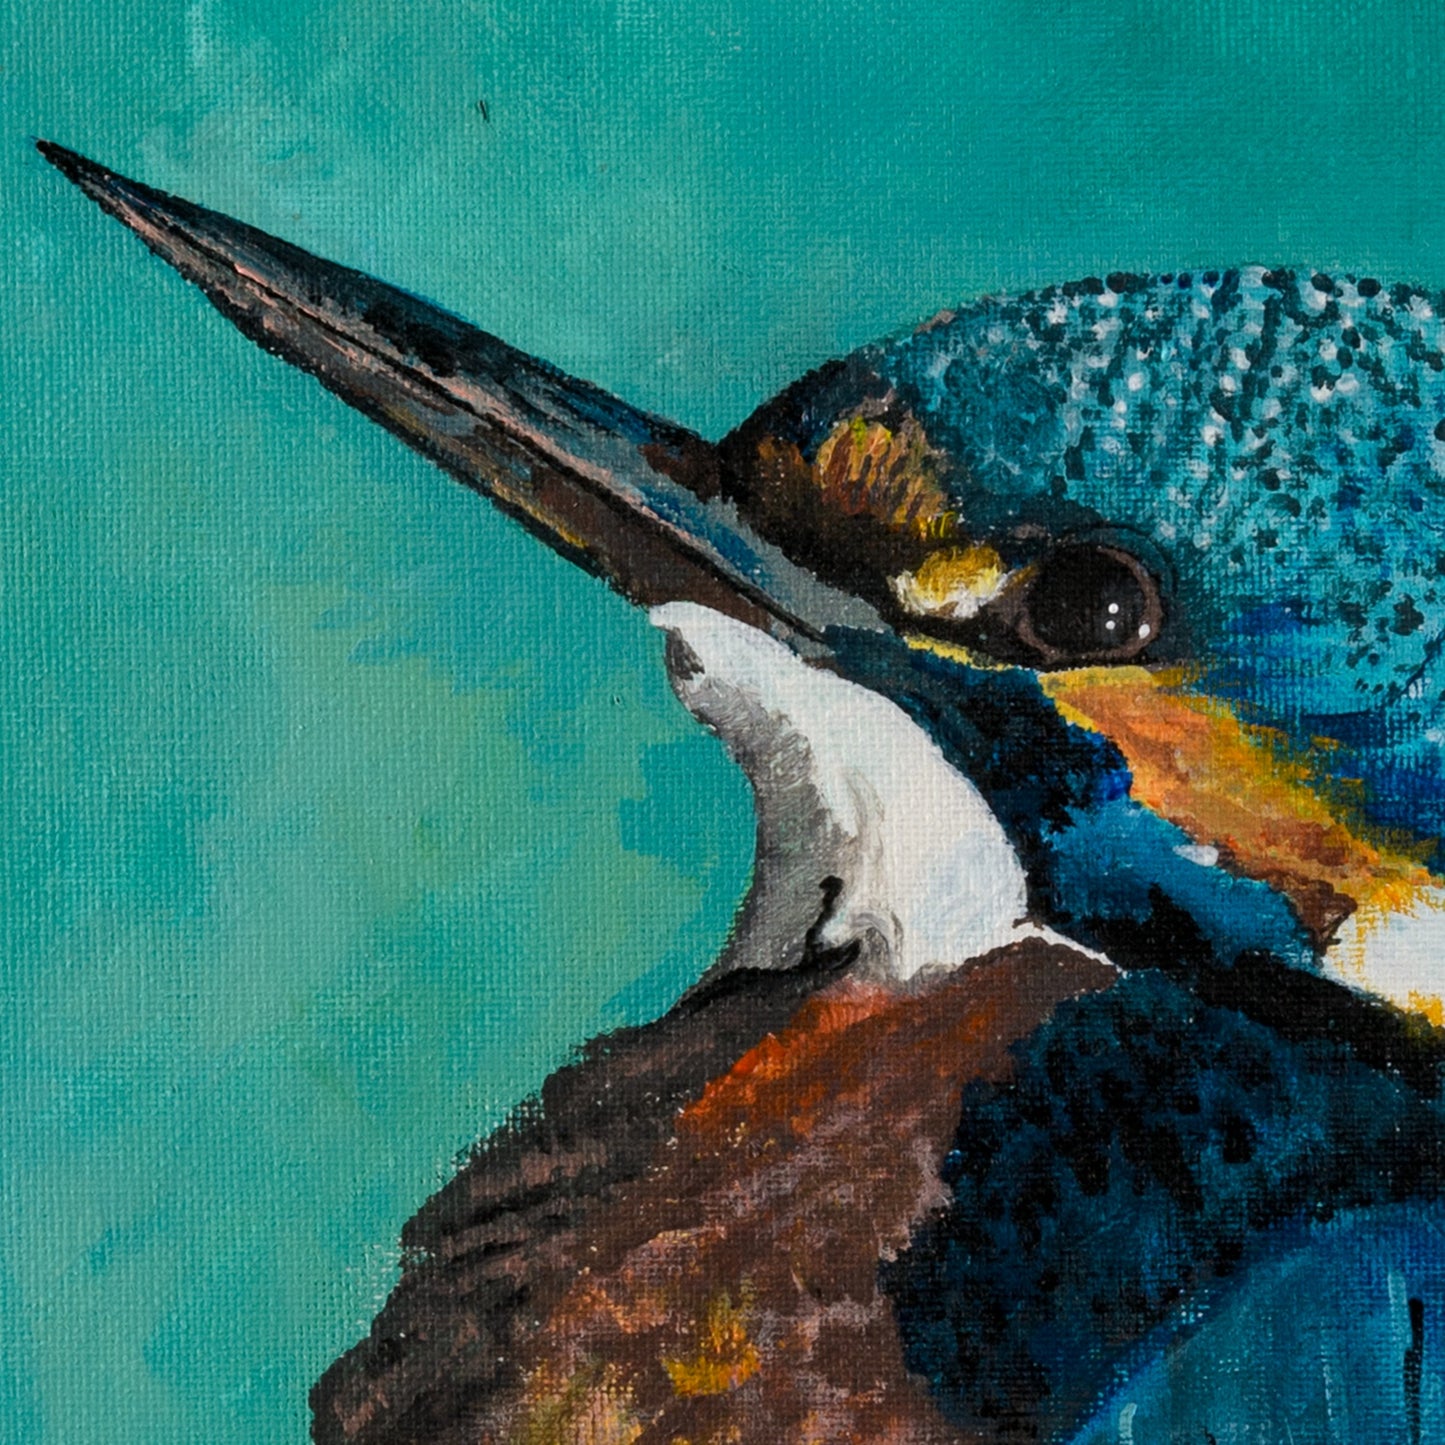 Jégmadár // Kingfisher